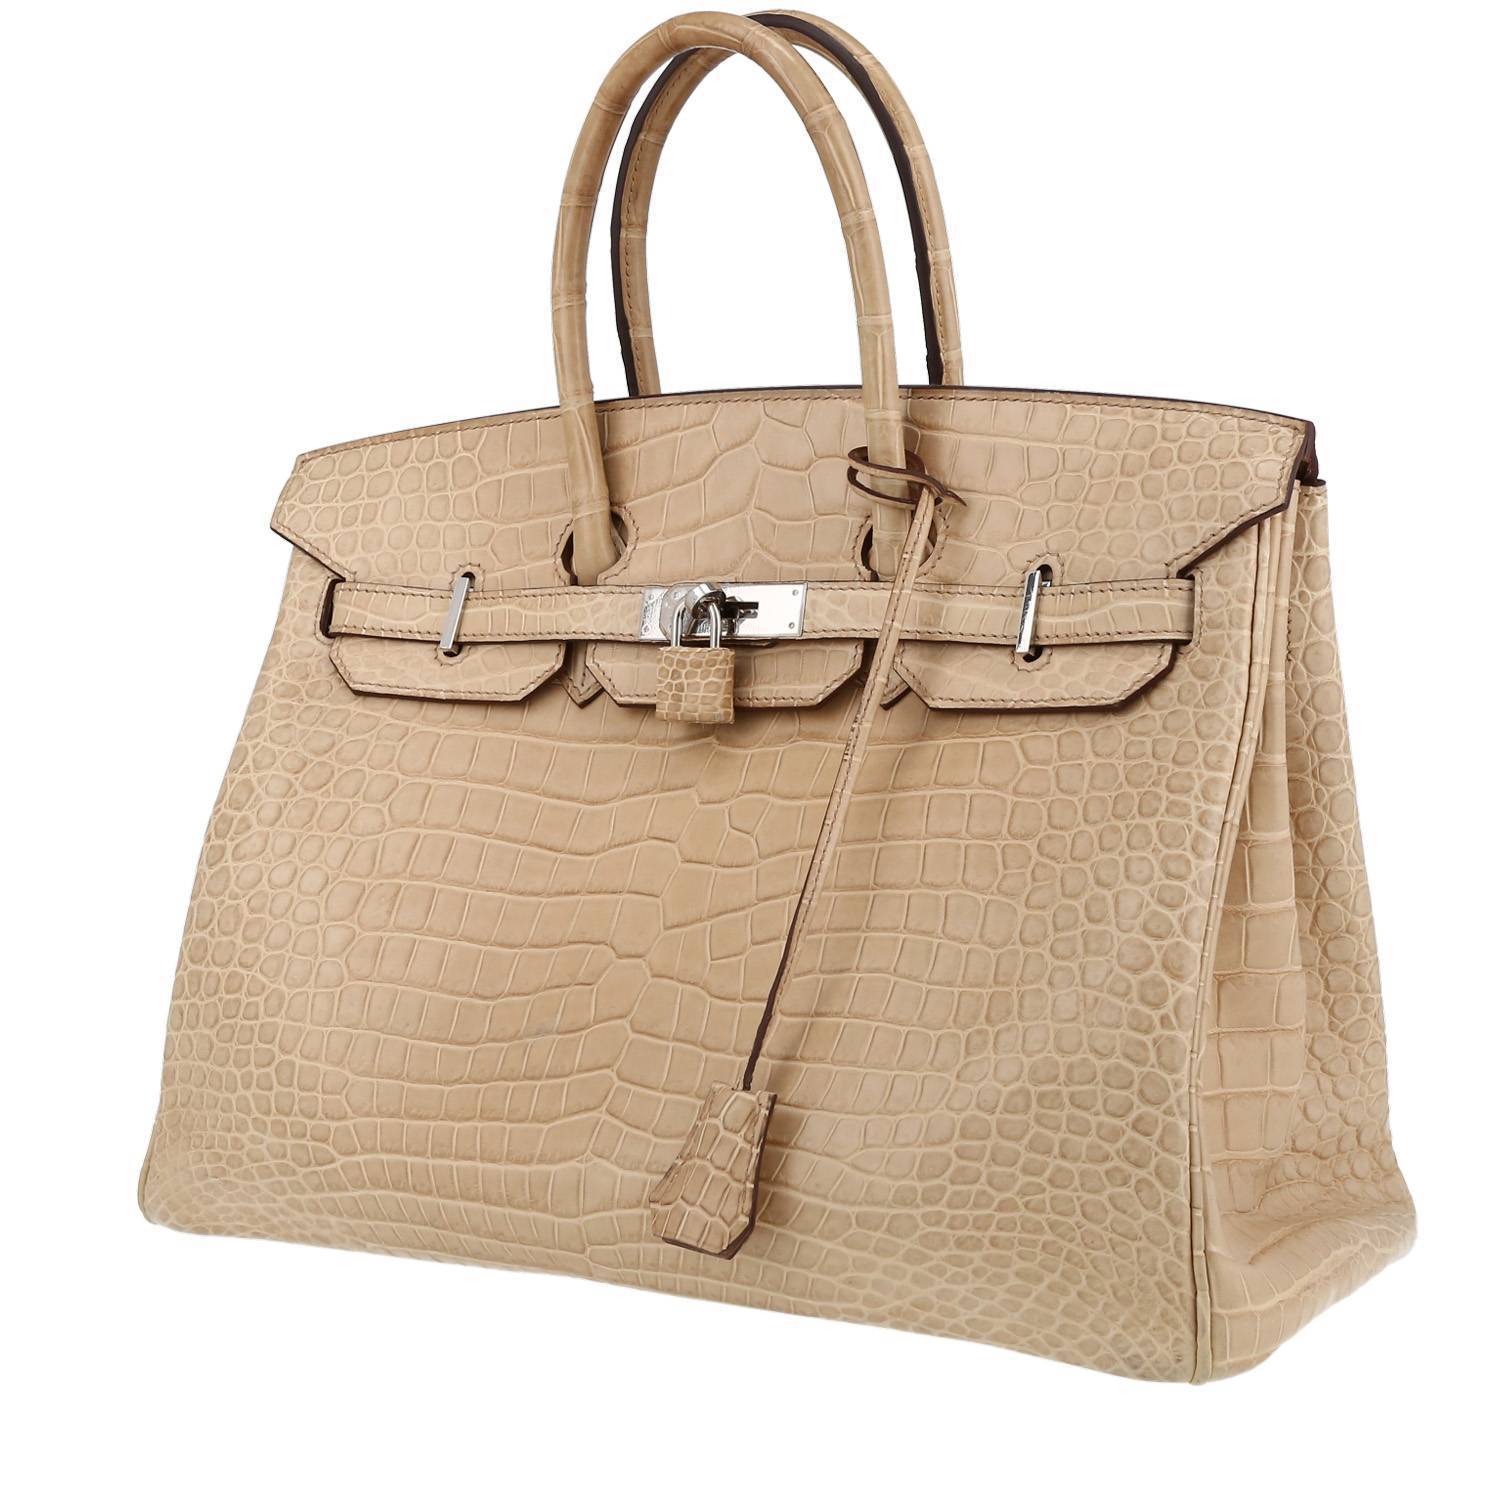 Hermes Birkin 35: Beige Leather Handbag